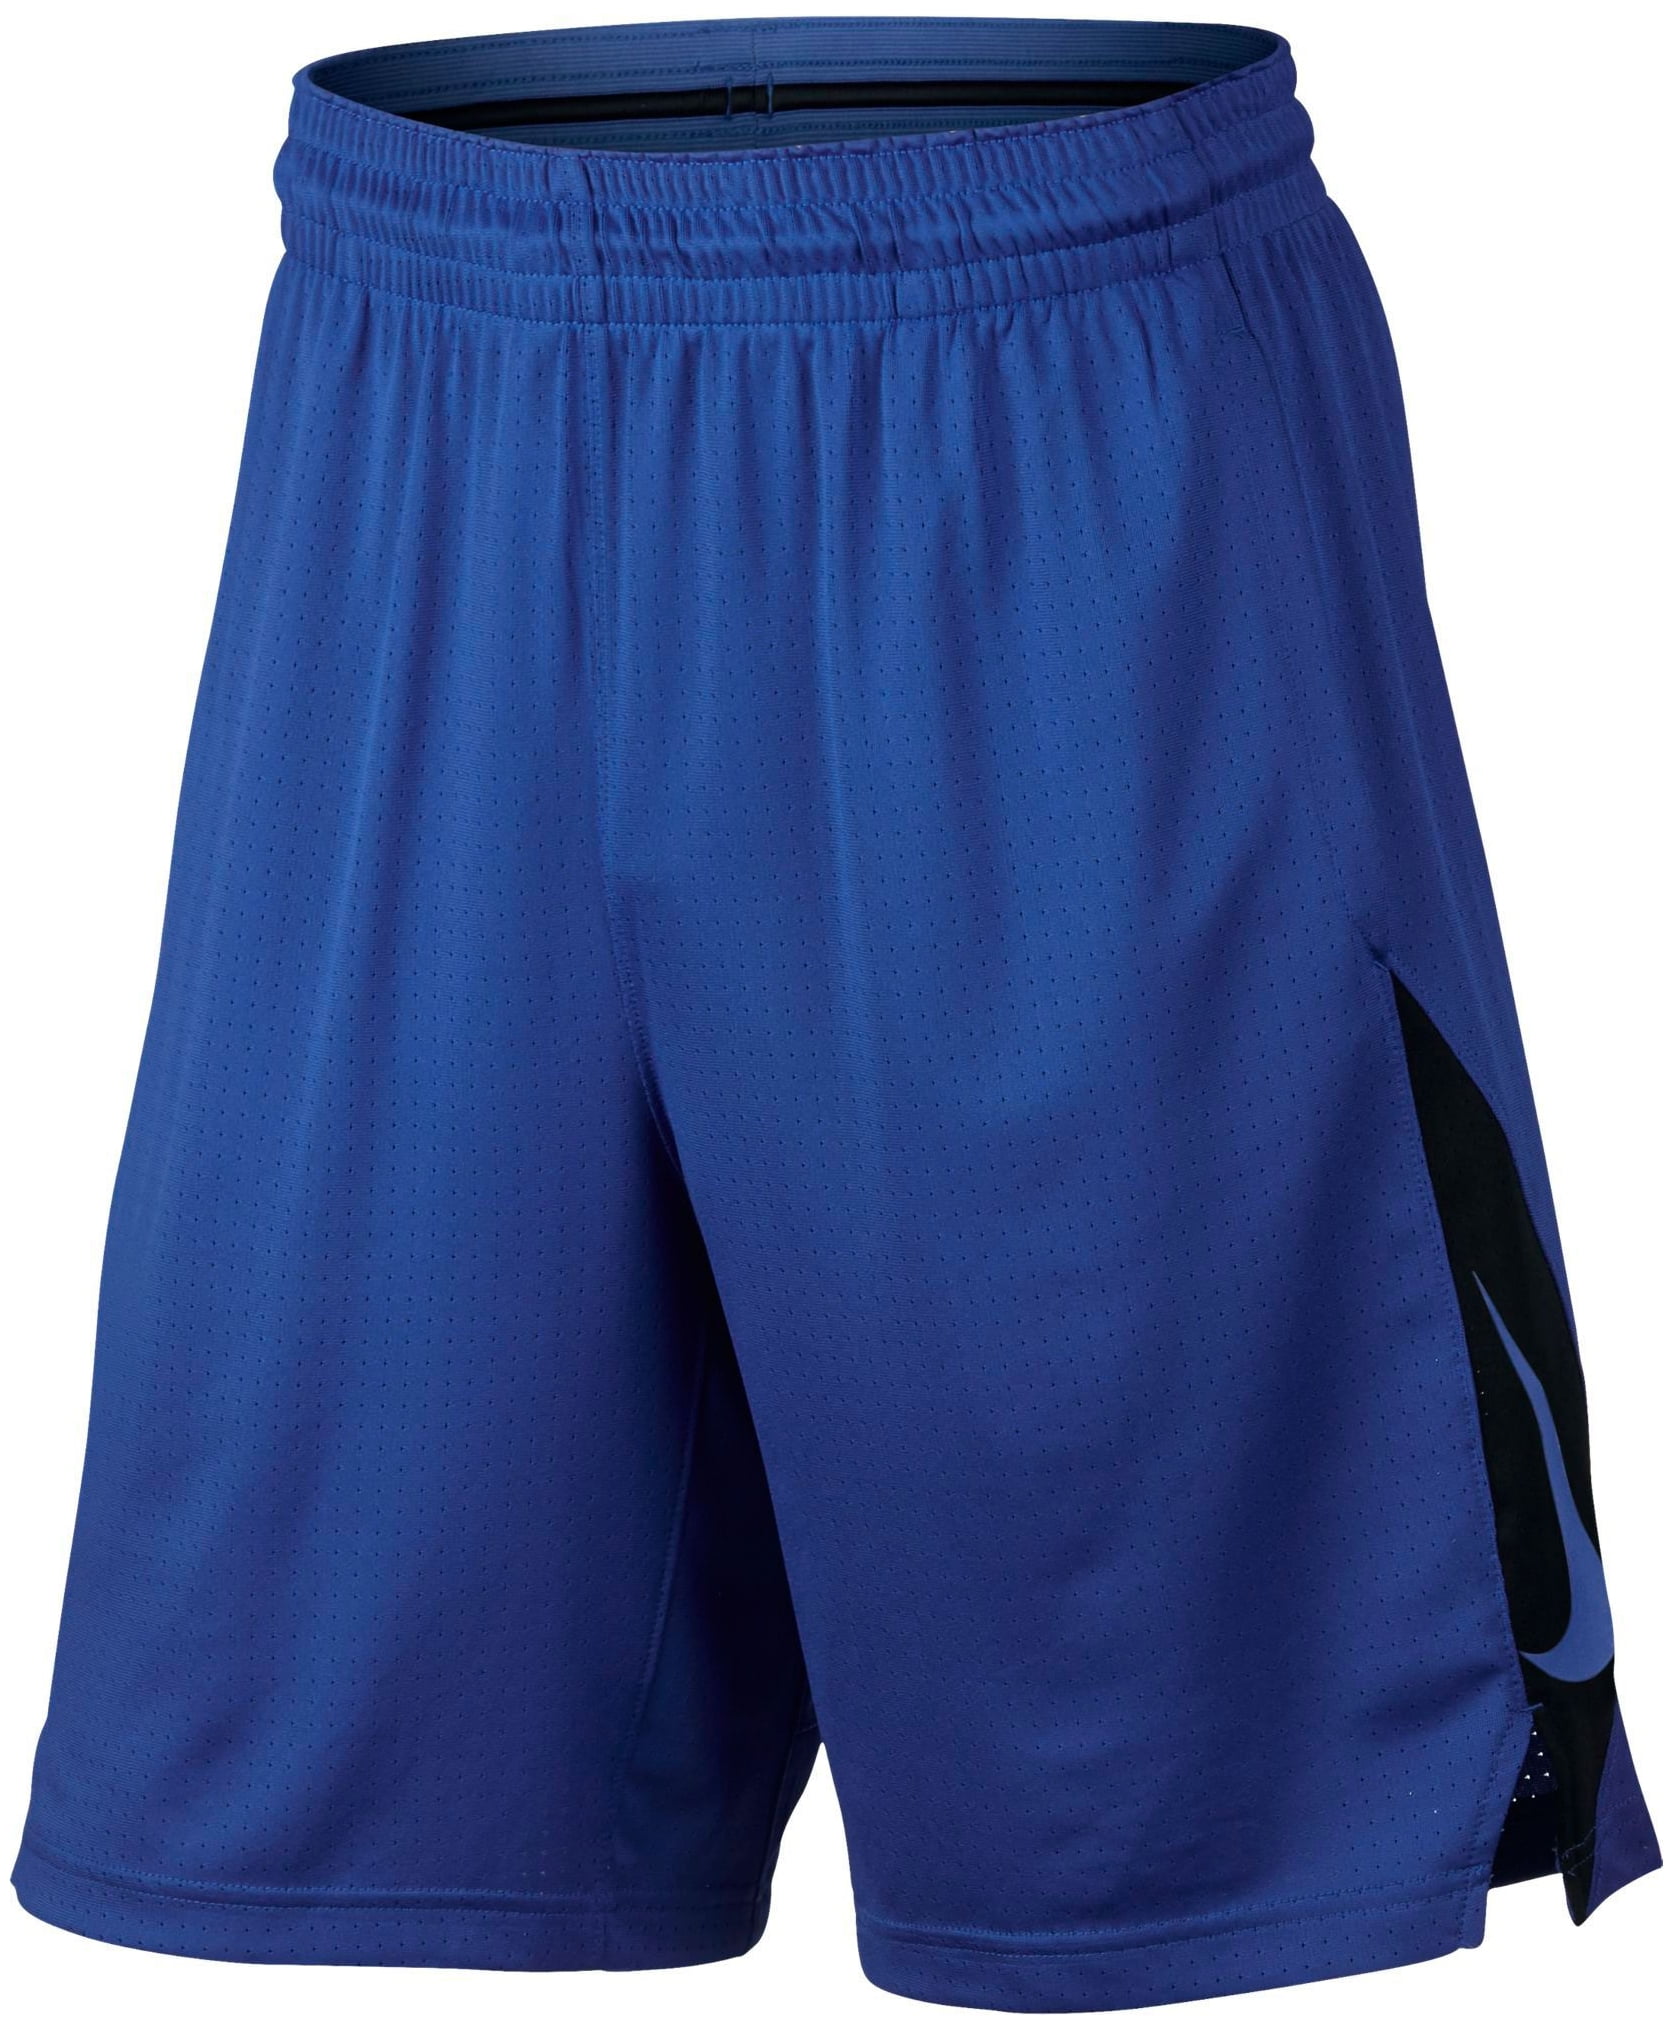 Nike Men's Dry Attack Mesh Basketball Shorts - Game Royal/Black - Size ...